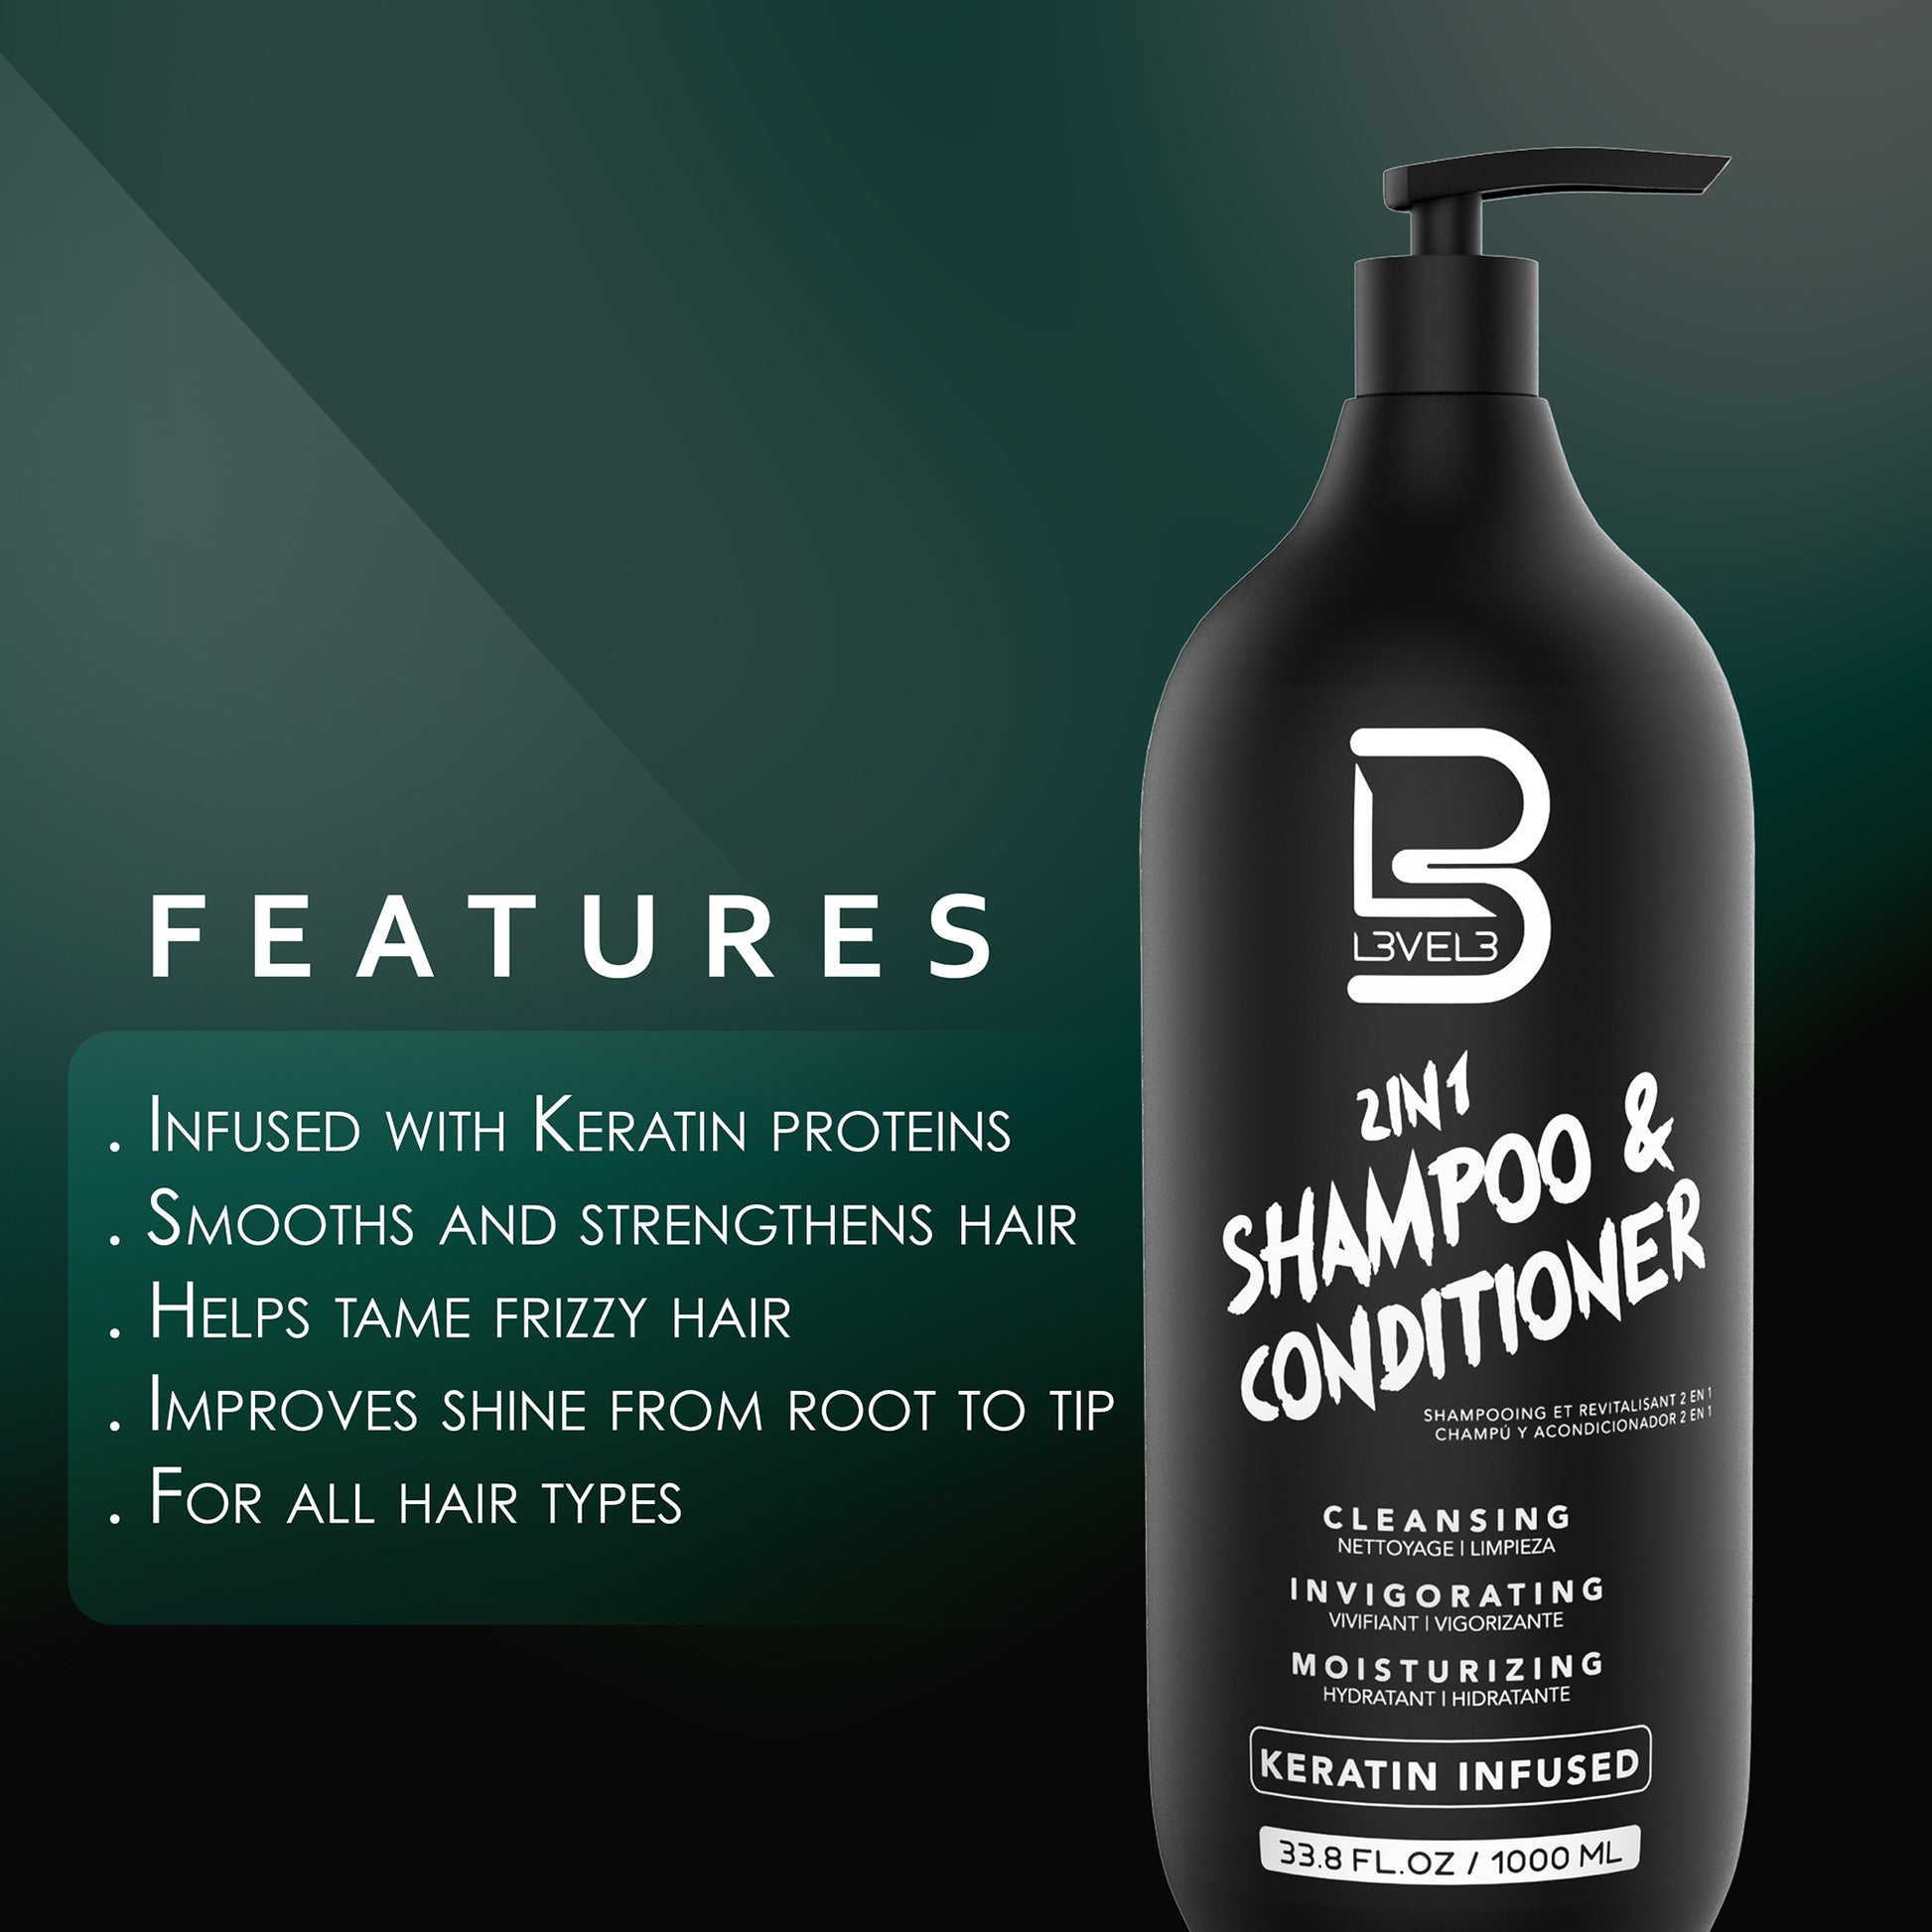 Level 3 Shampoo Features